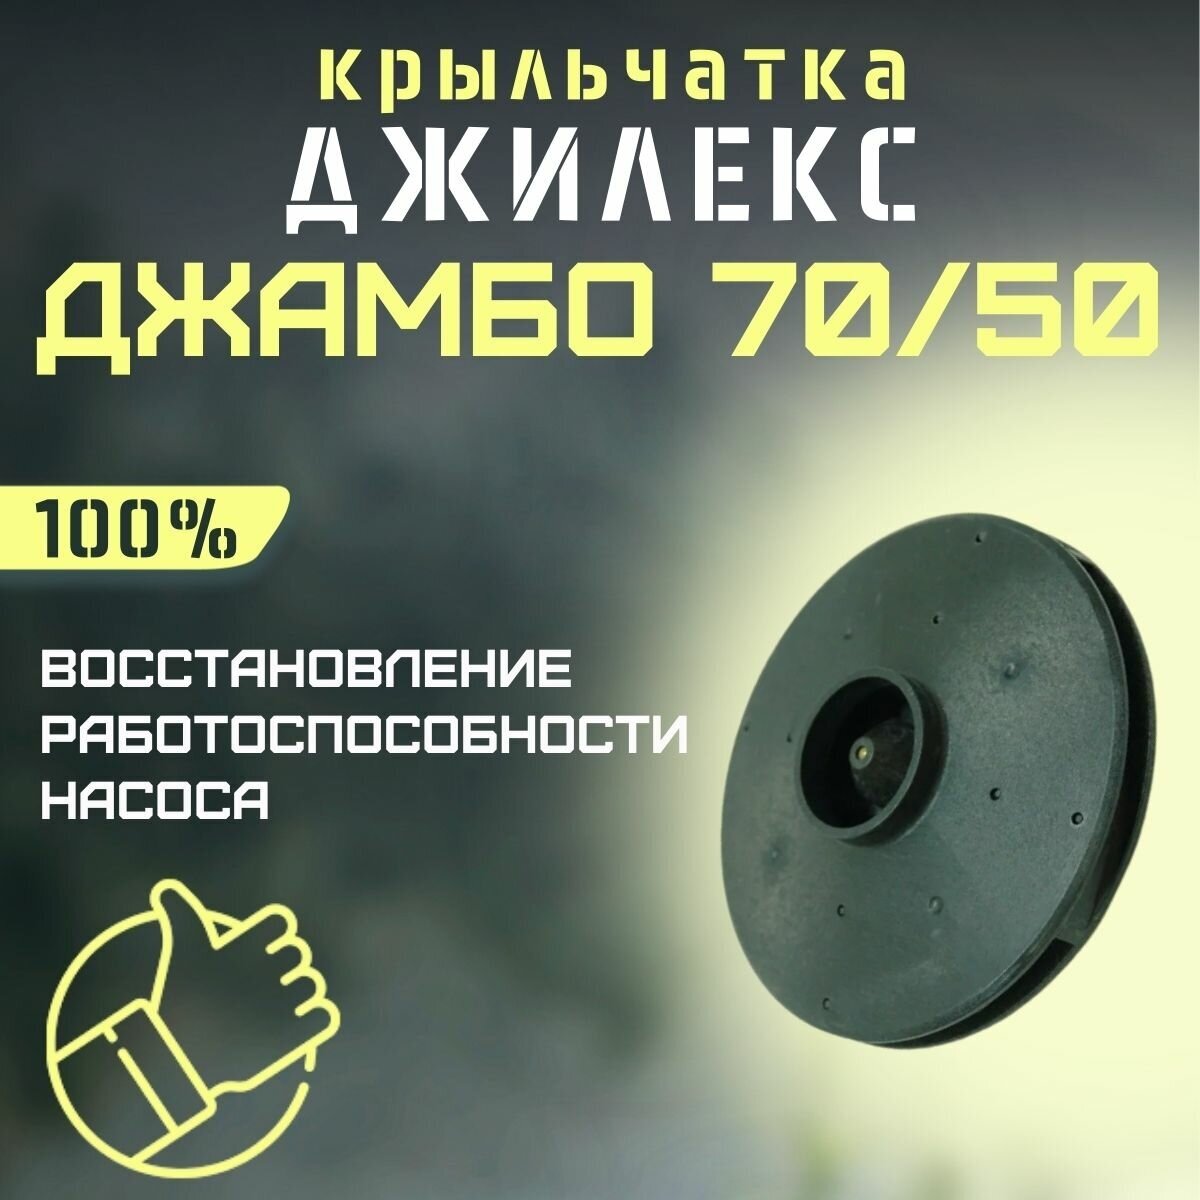 Джилекс крыльчатка Джамбо 70/50 (krylchatka7050)